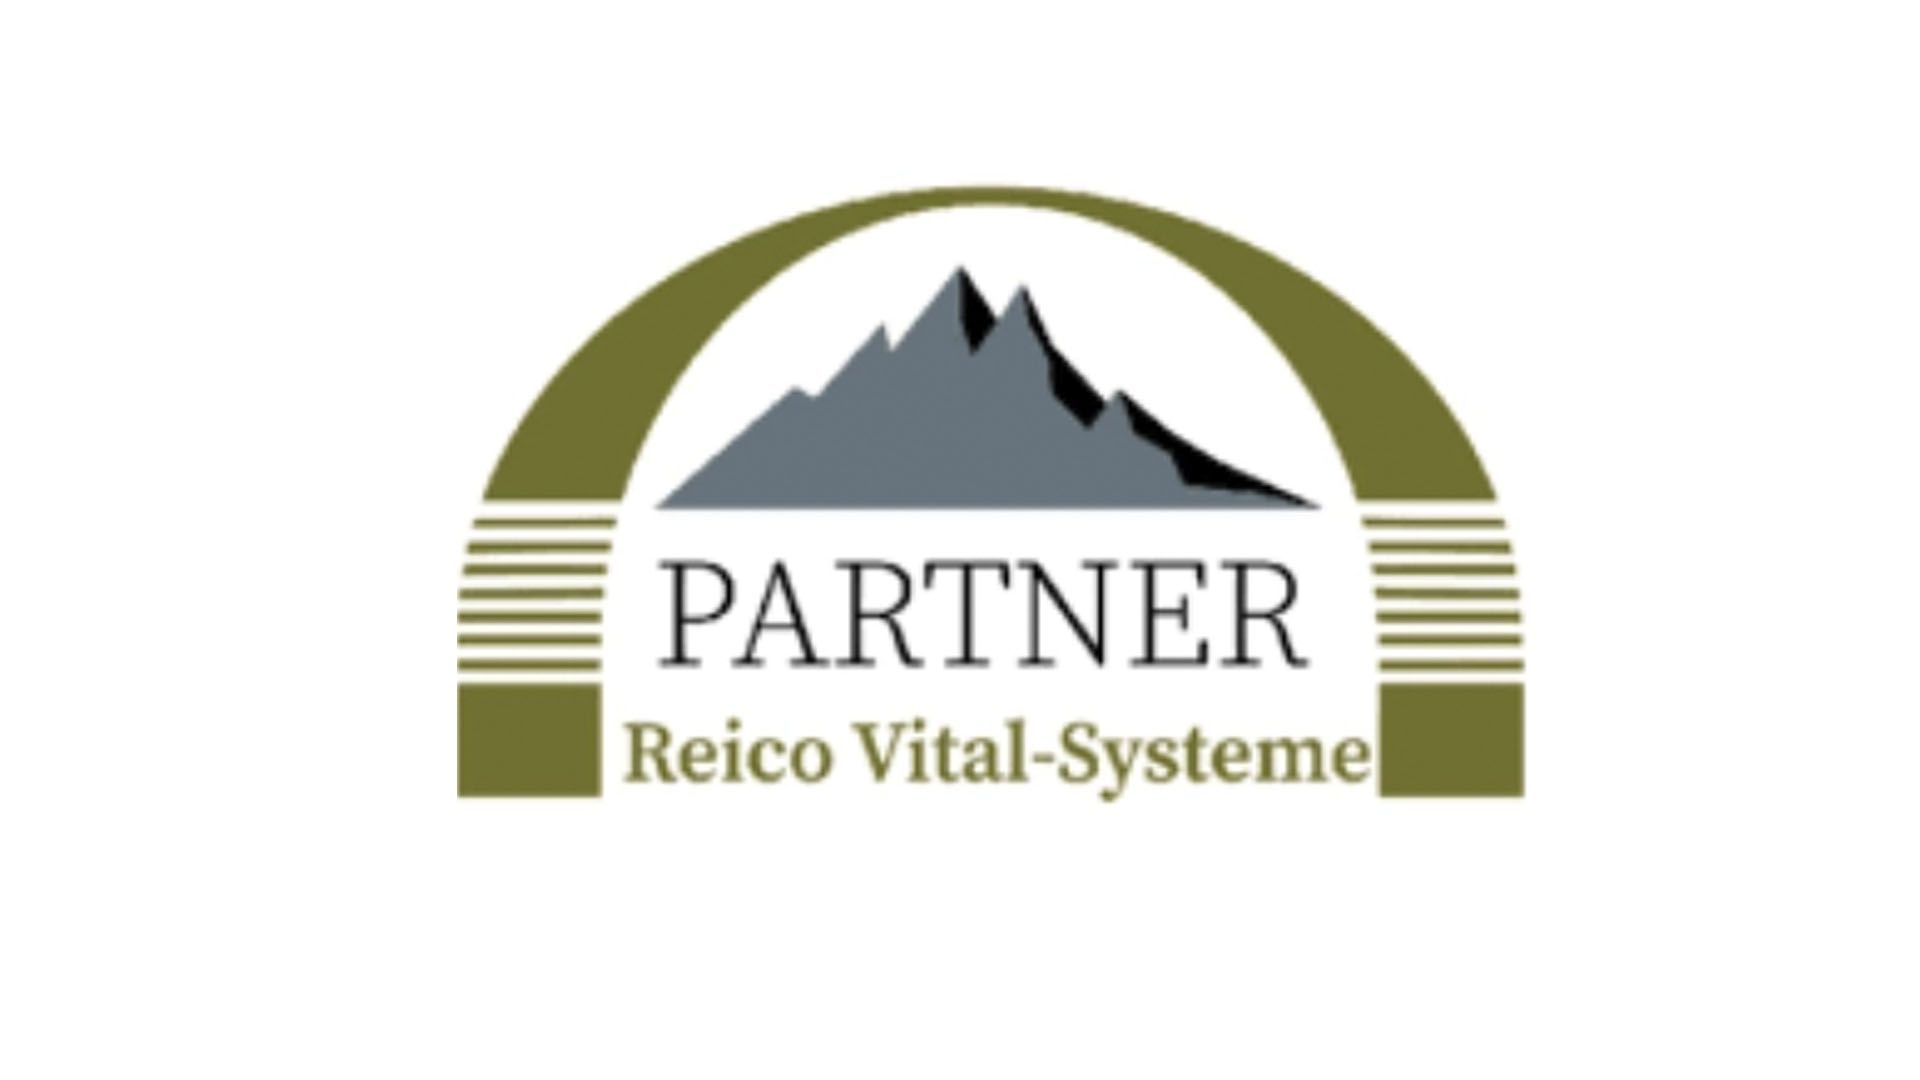 Reico Vital Systeme - Partner